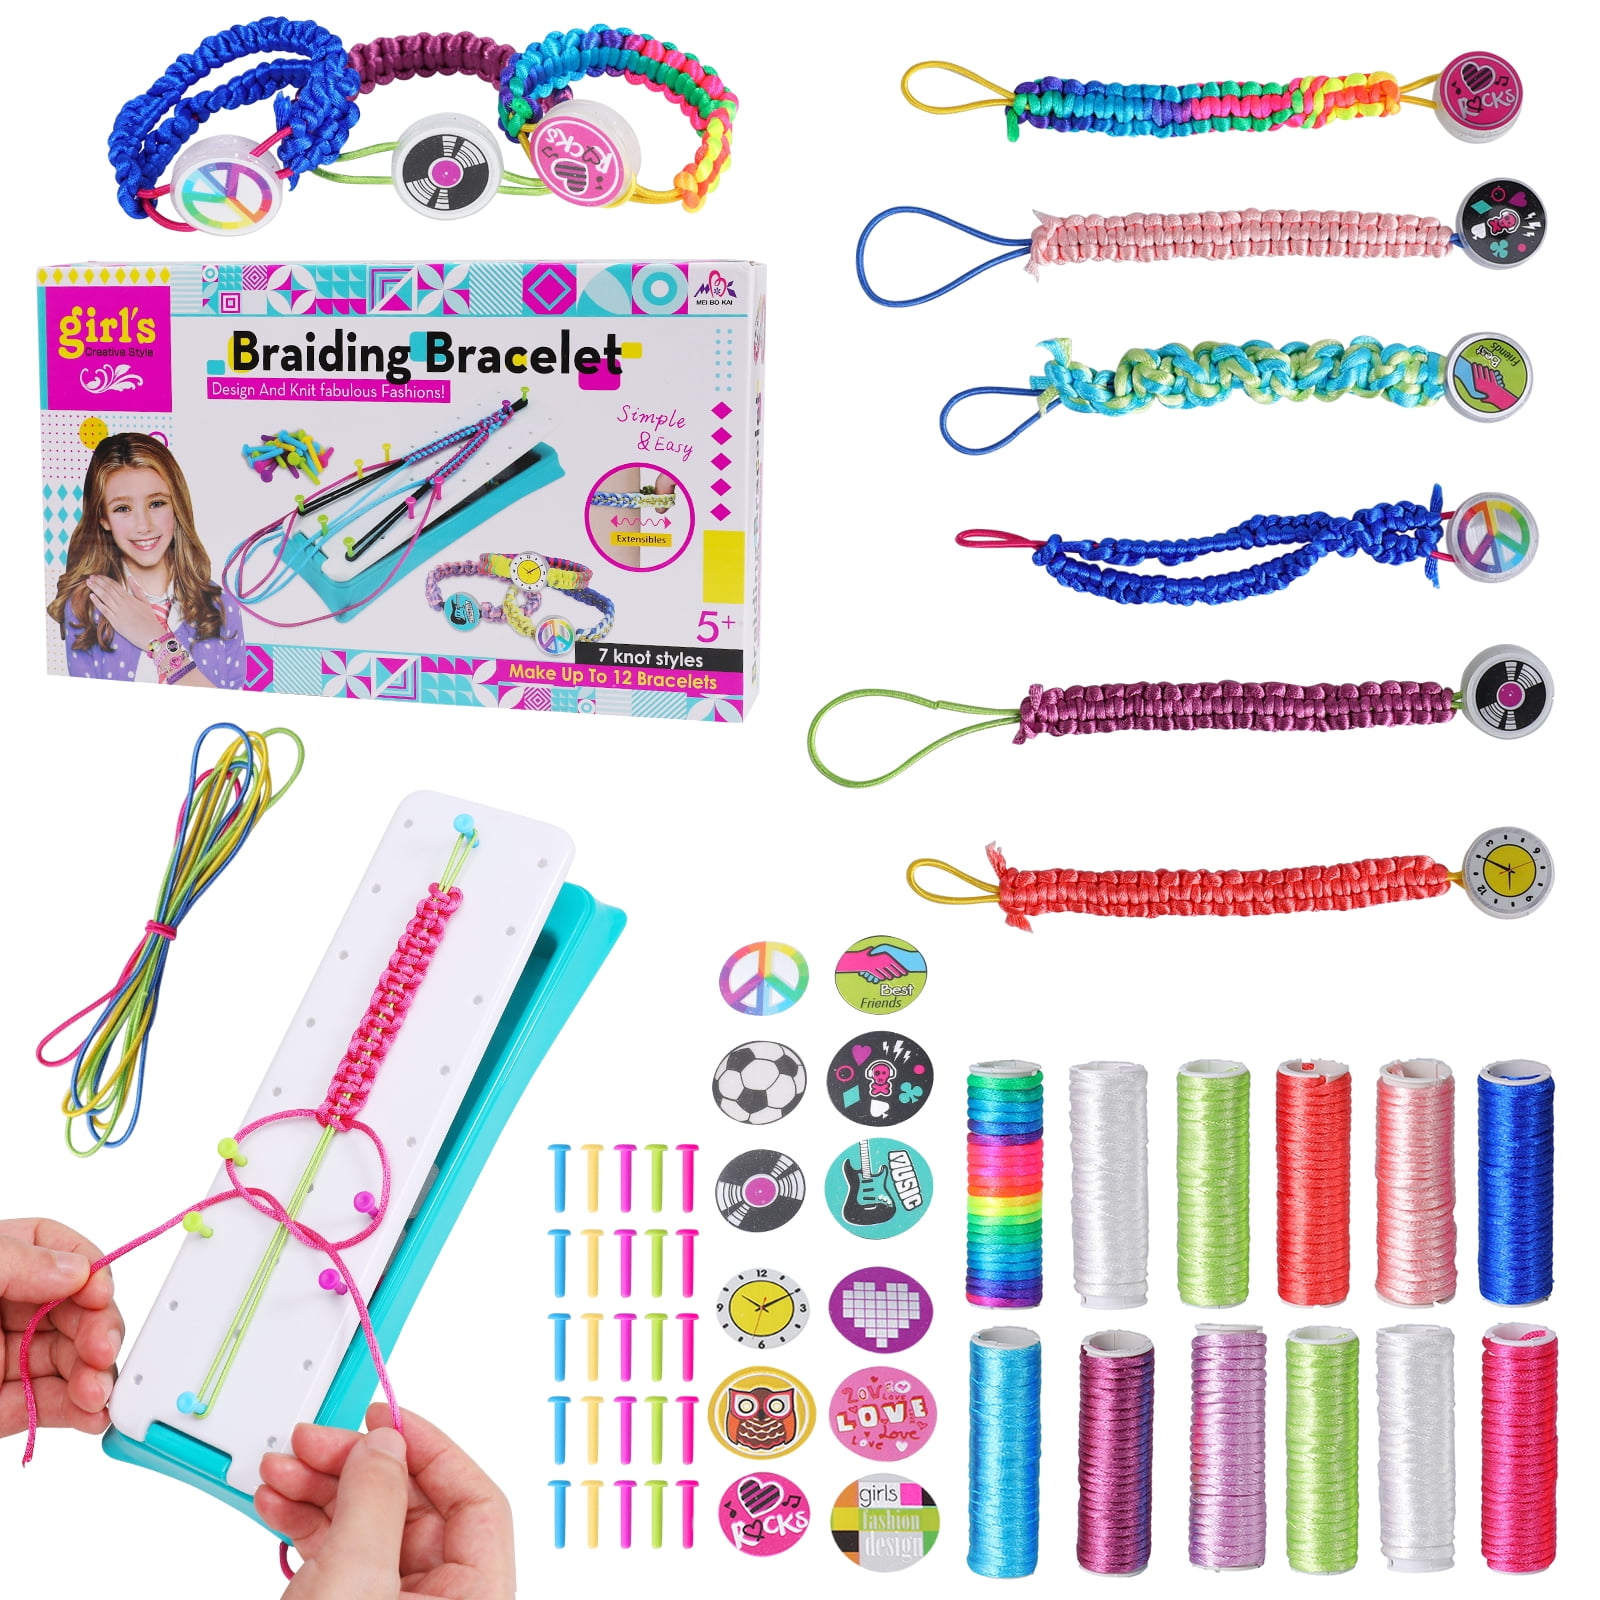 Friendship Bracelet Kit, Bracelet Making Kit, Crafts For Girls Ages 8-12,  Bracelet Maker, Girls Toys Age 7 8 9 10 11 Years Old, Best Gift For